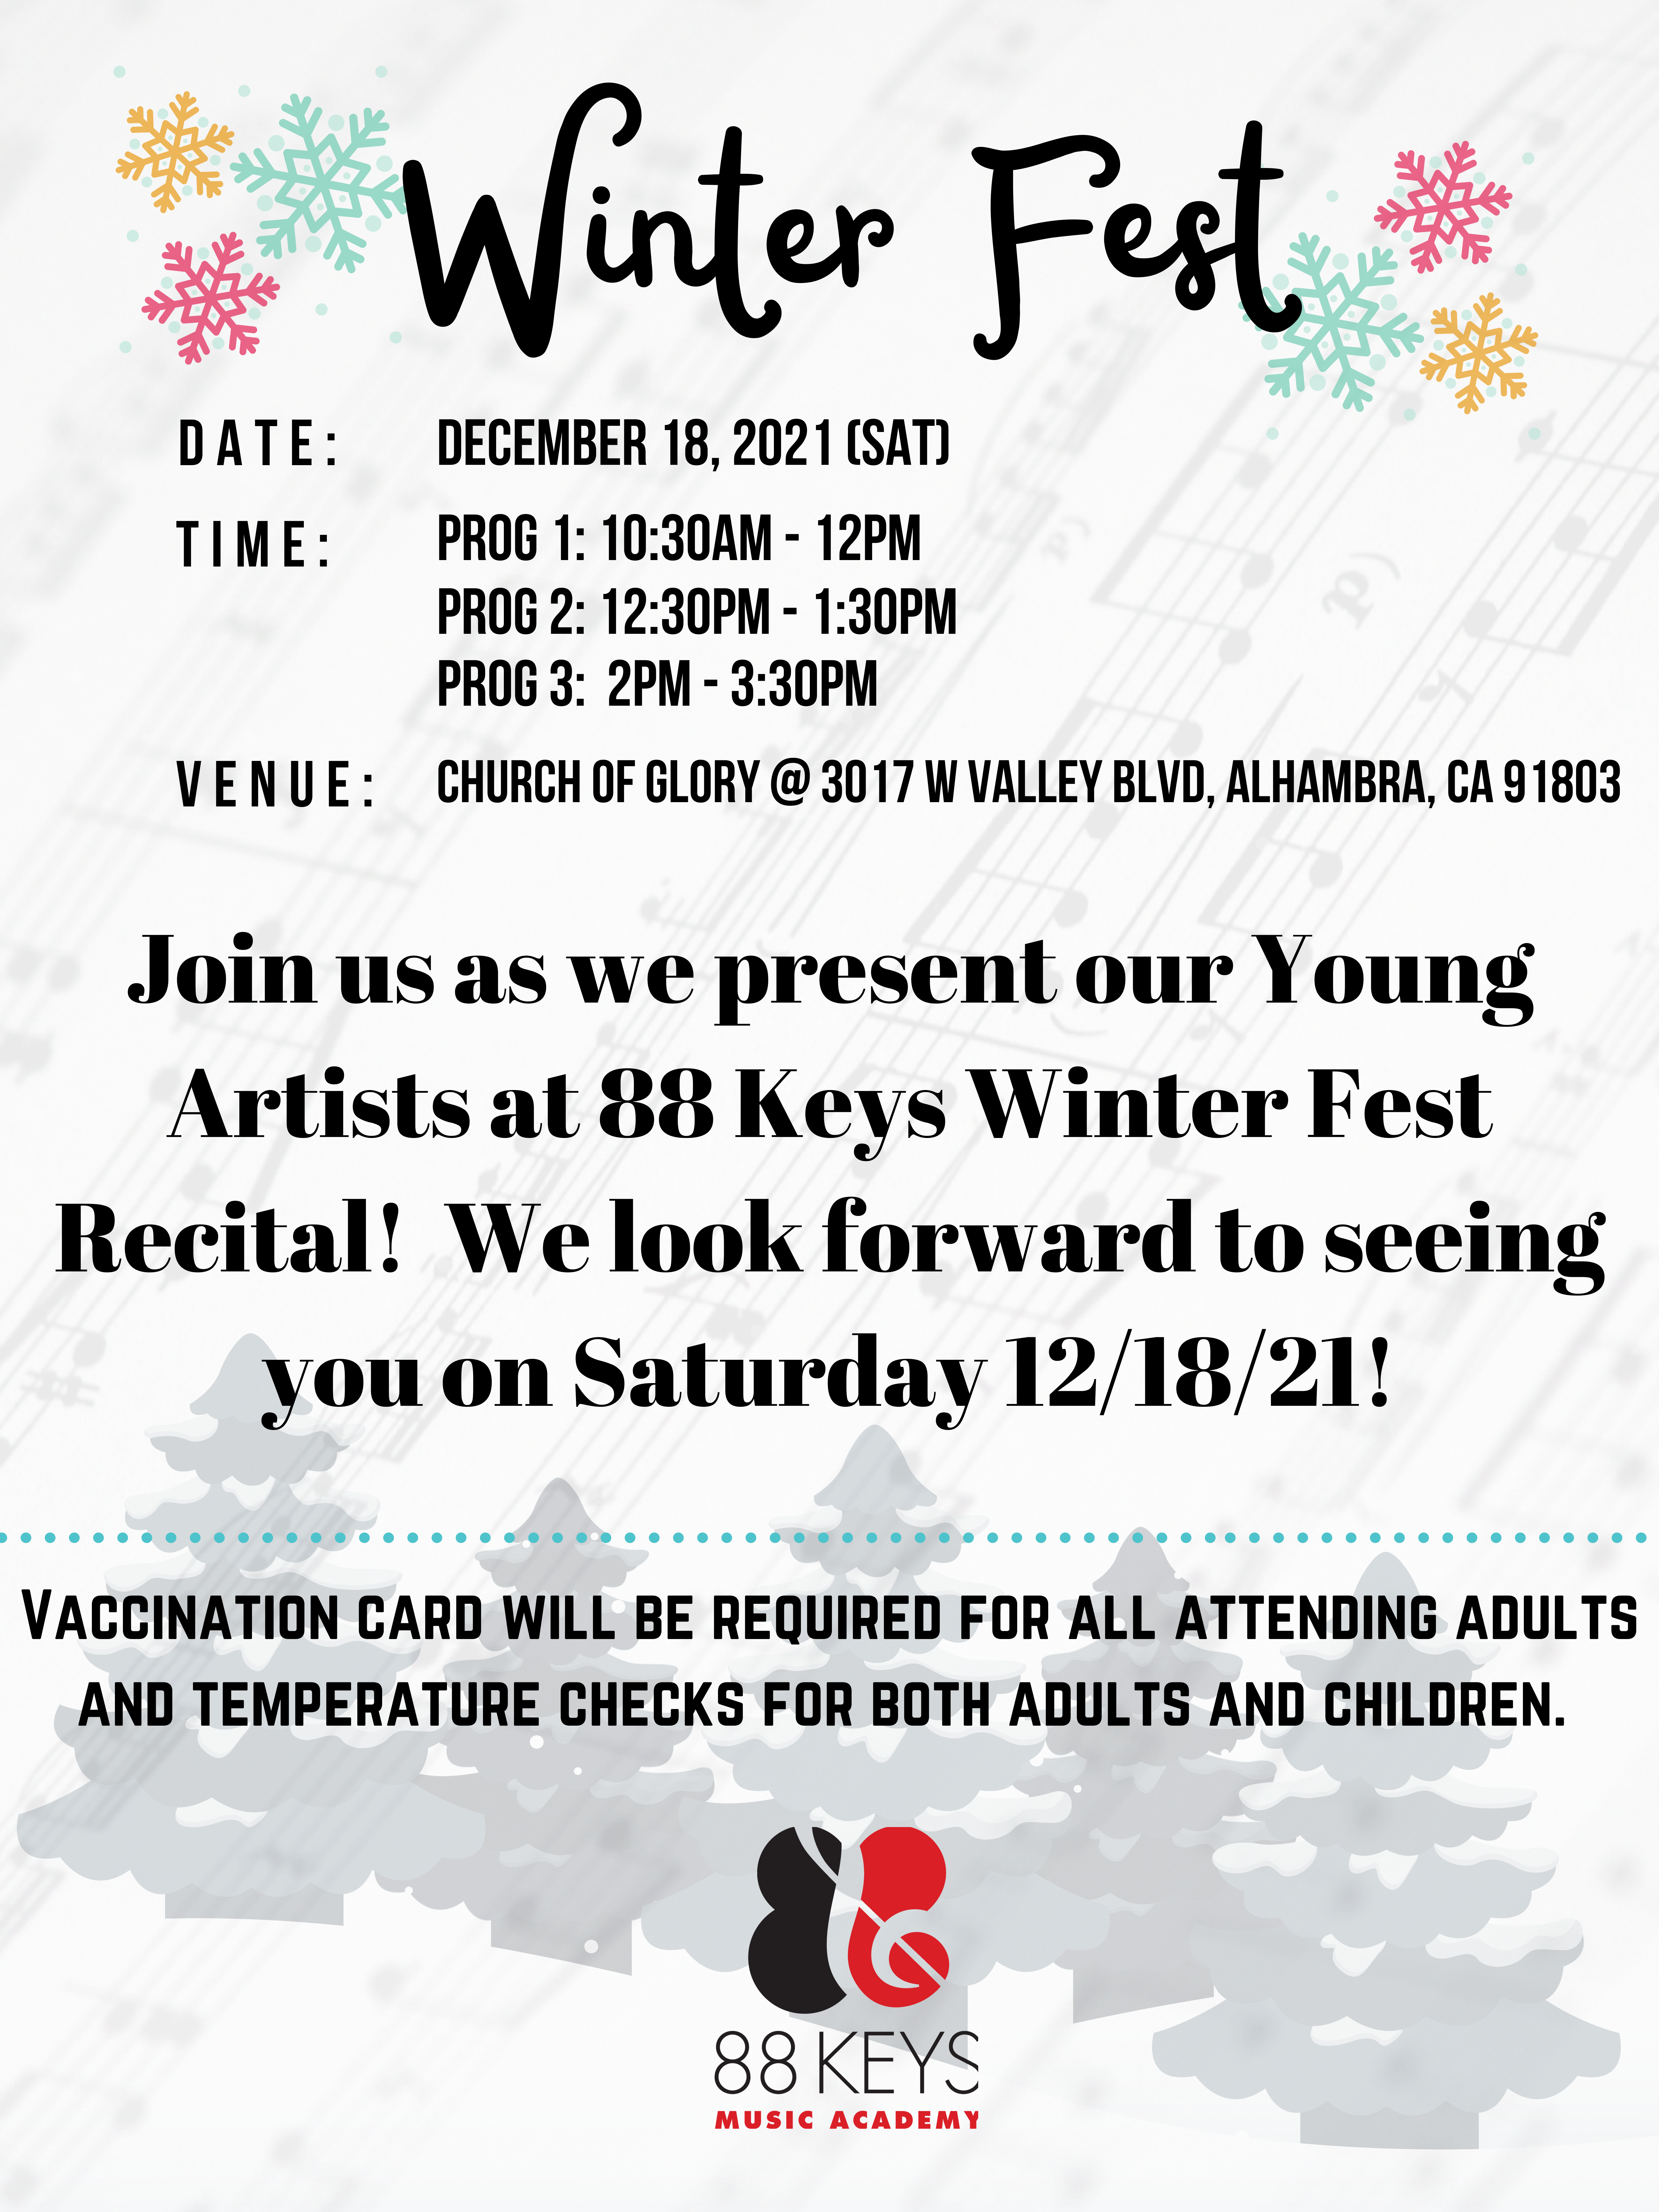 88 Keys Music Academy Winter Fest Invitation